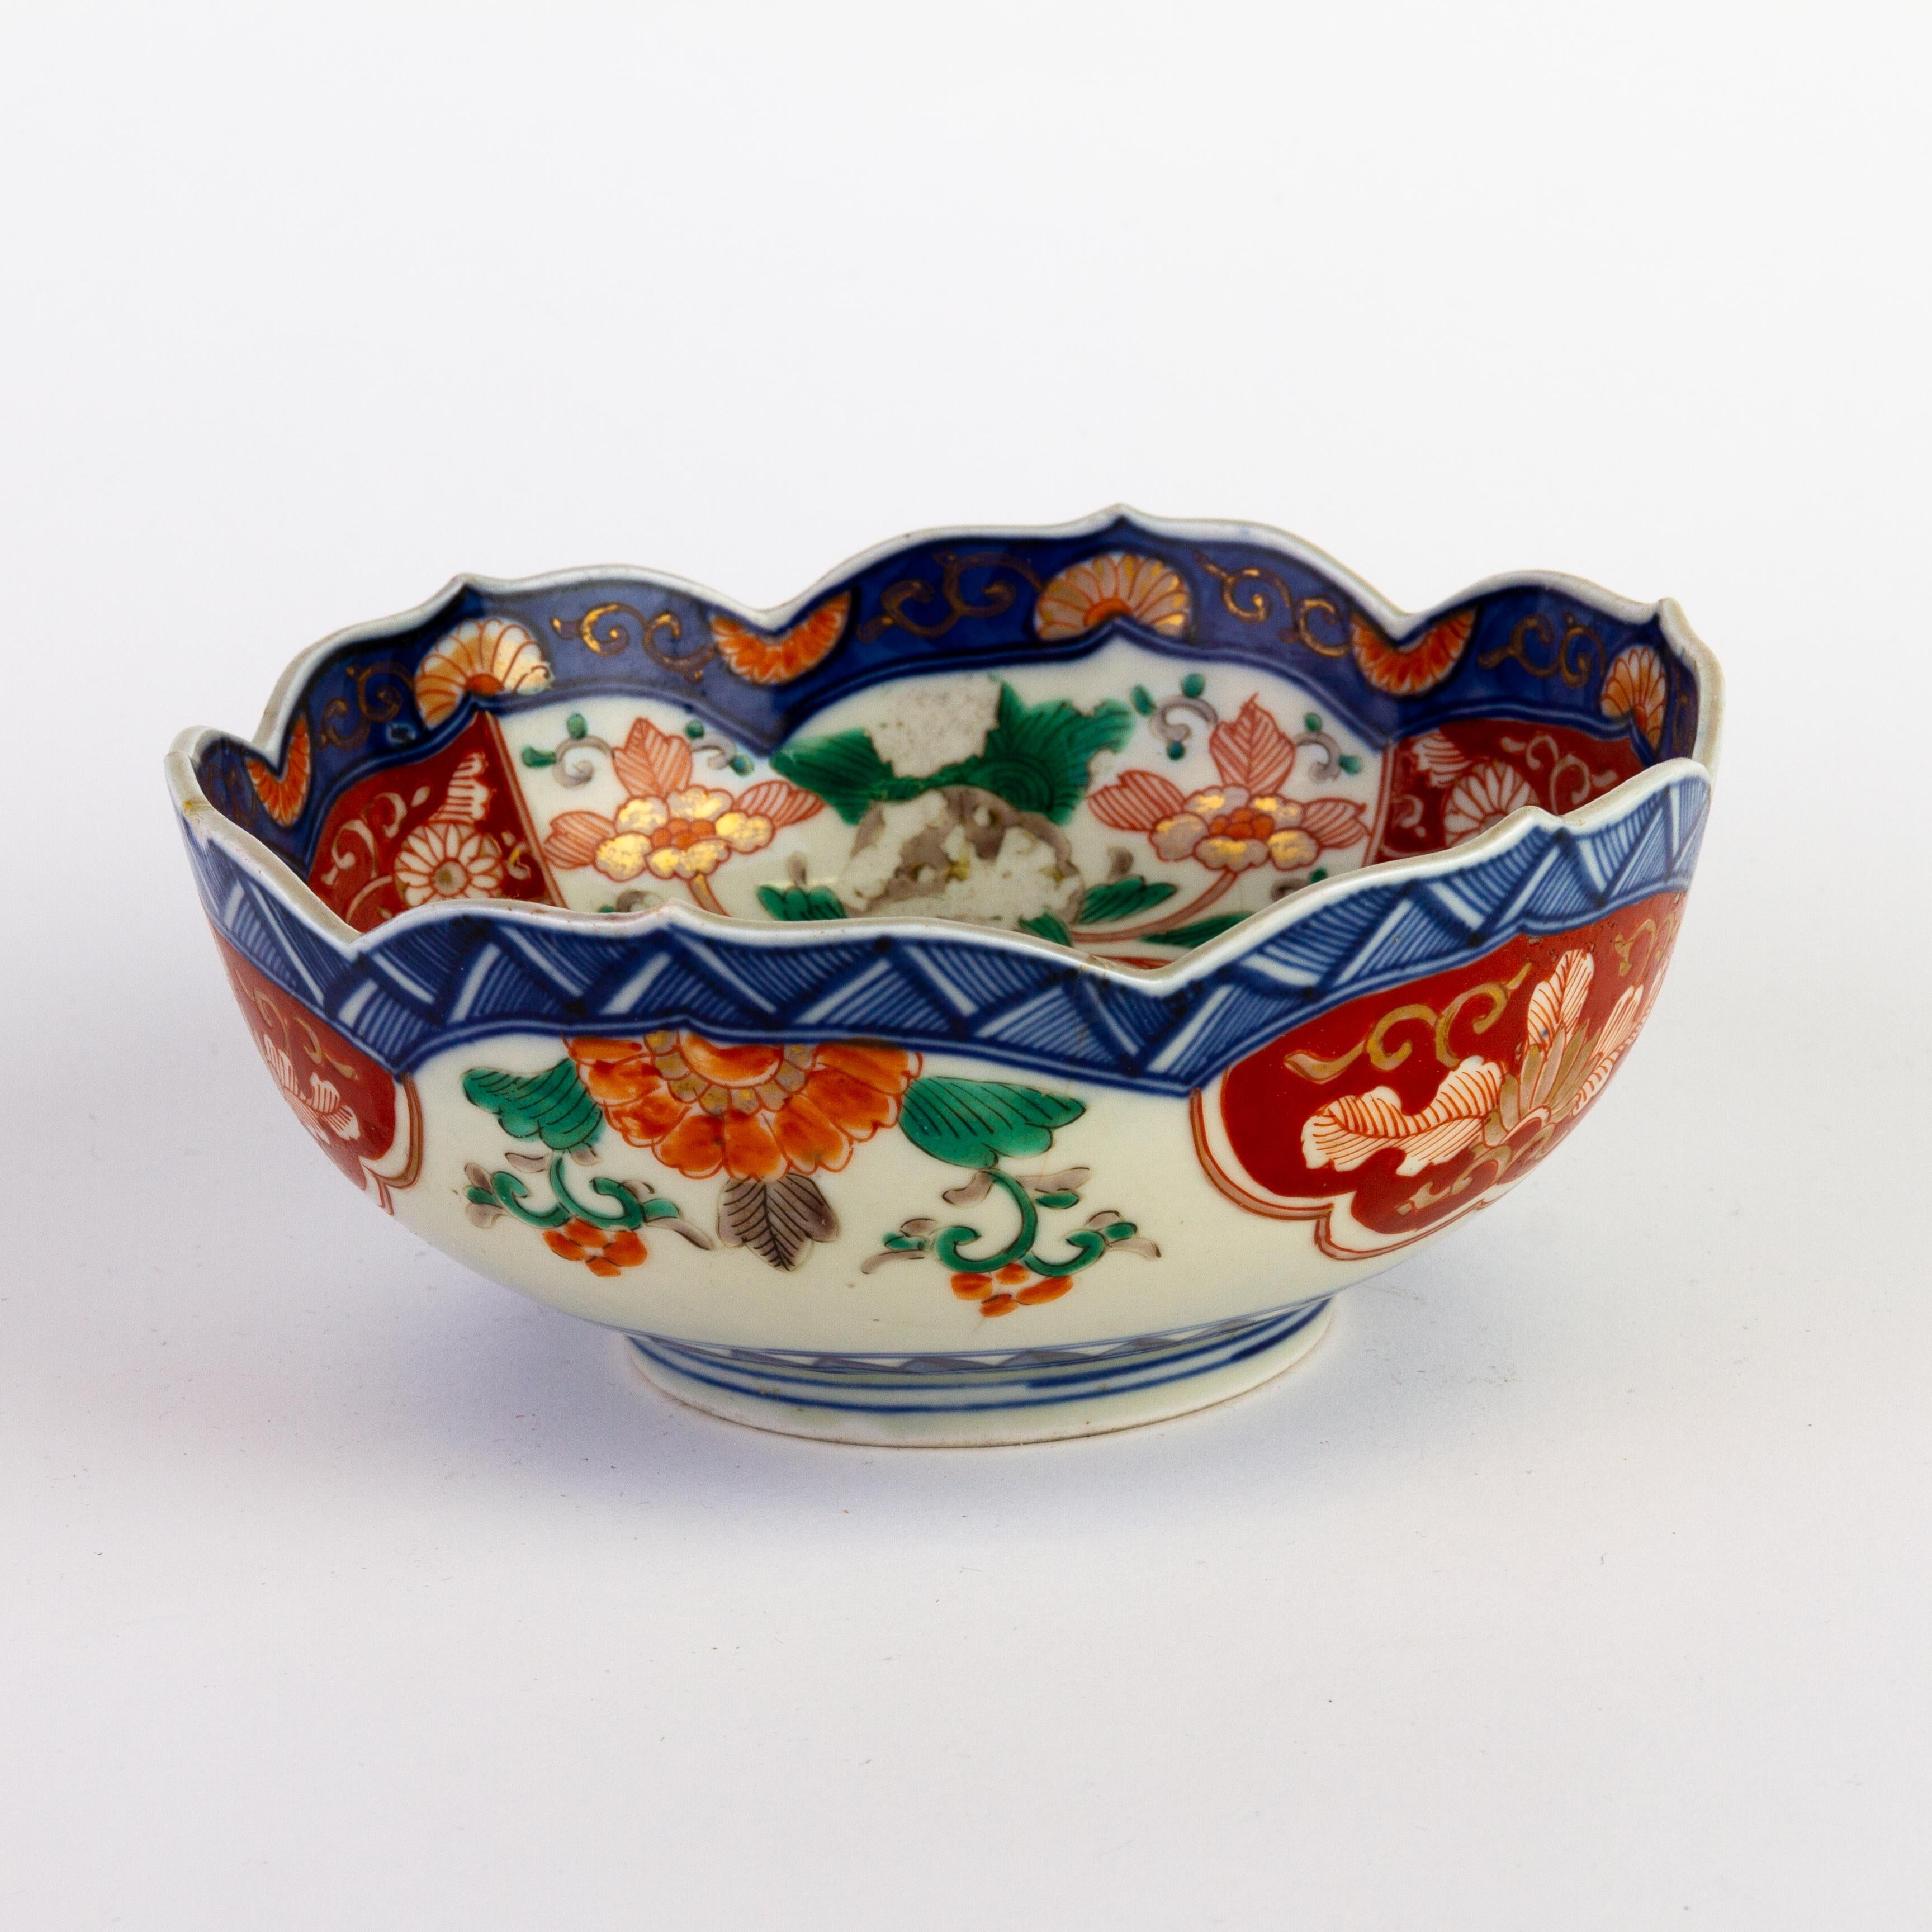 Japanese Imari Porcelain Bowl 19th Century Meiji

Good condition
Free international shipping.